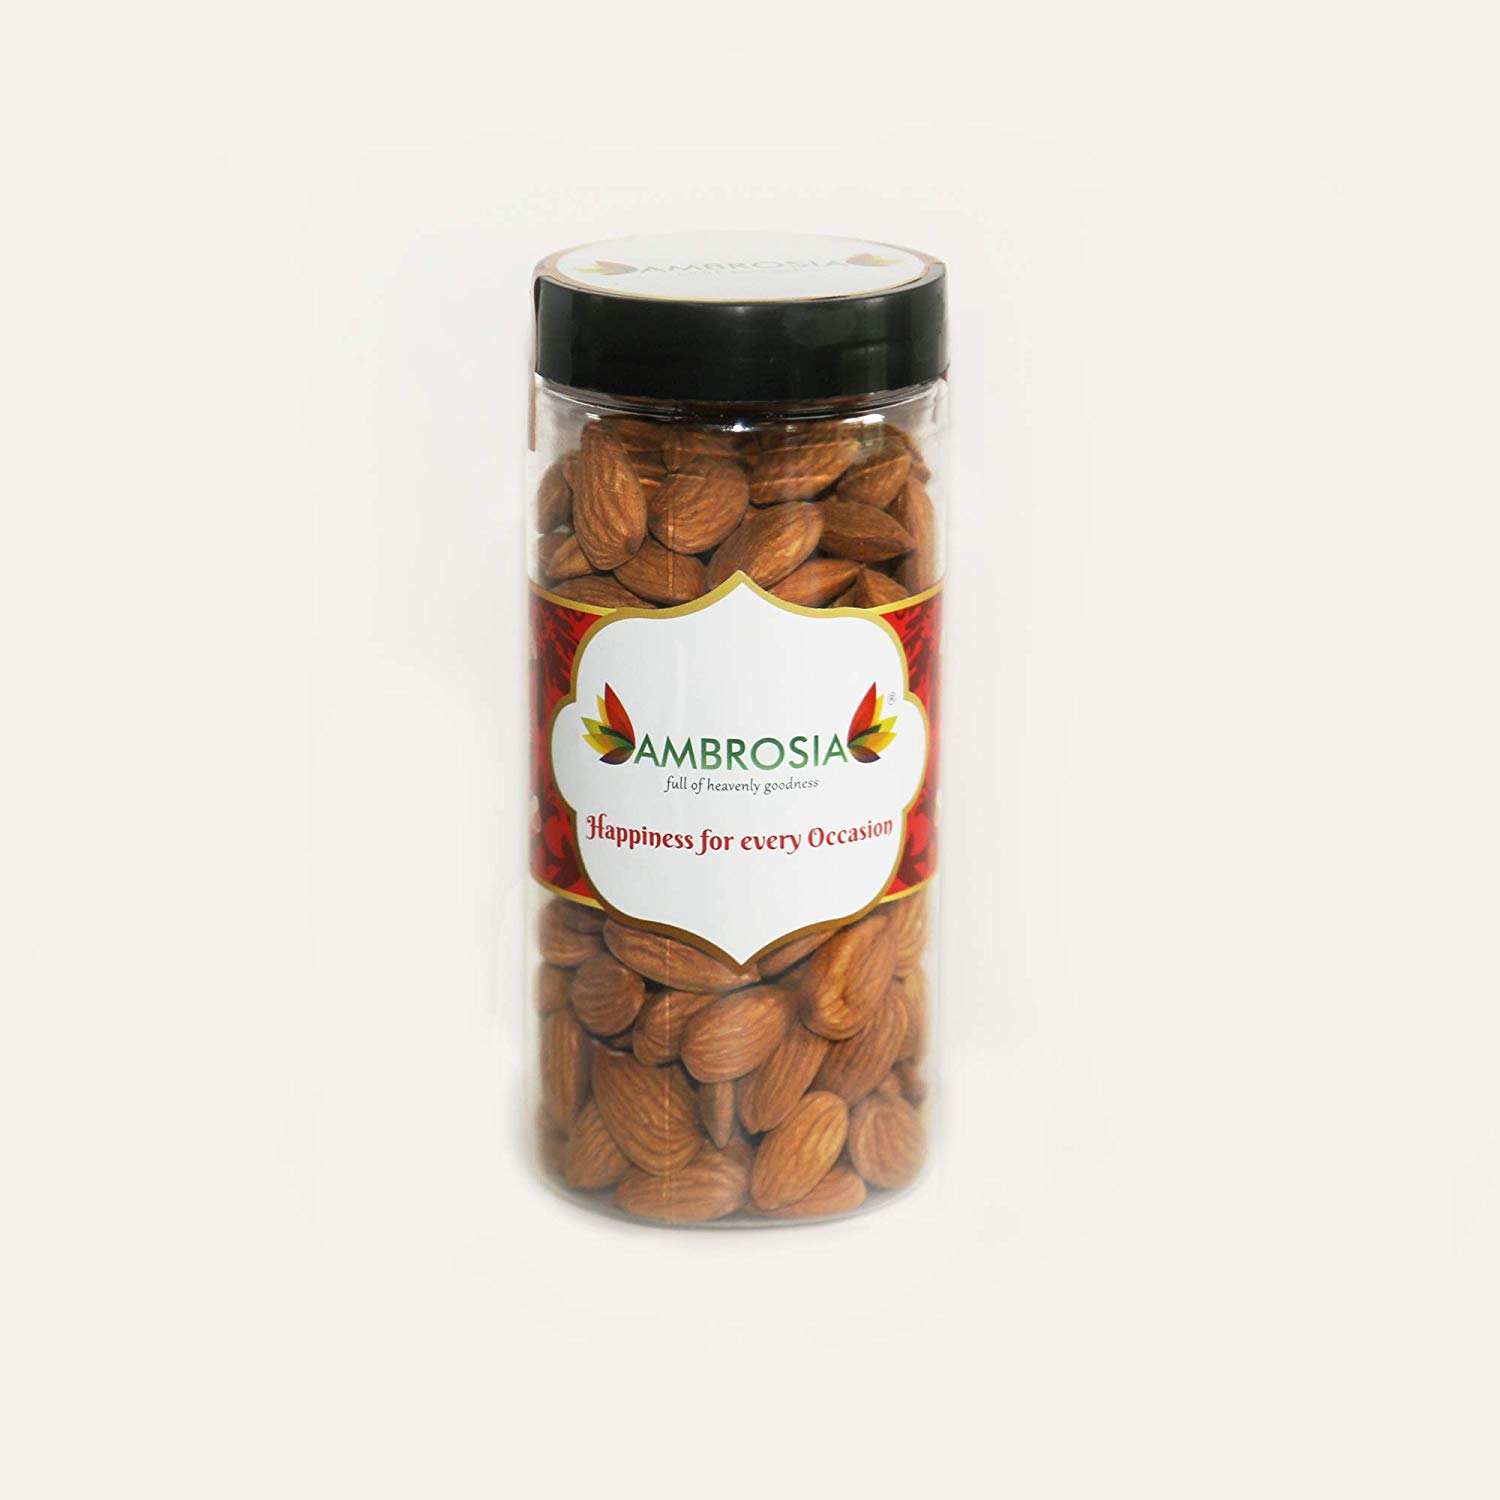 Buy california walnuts online